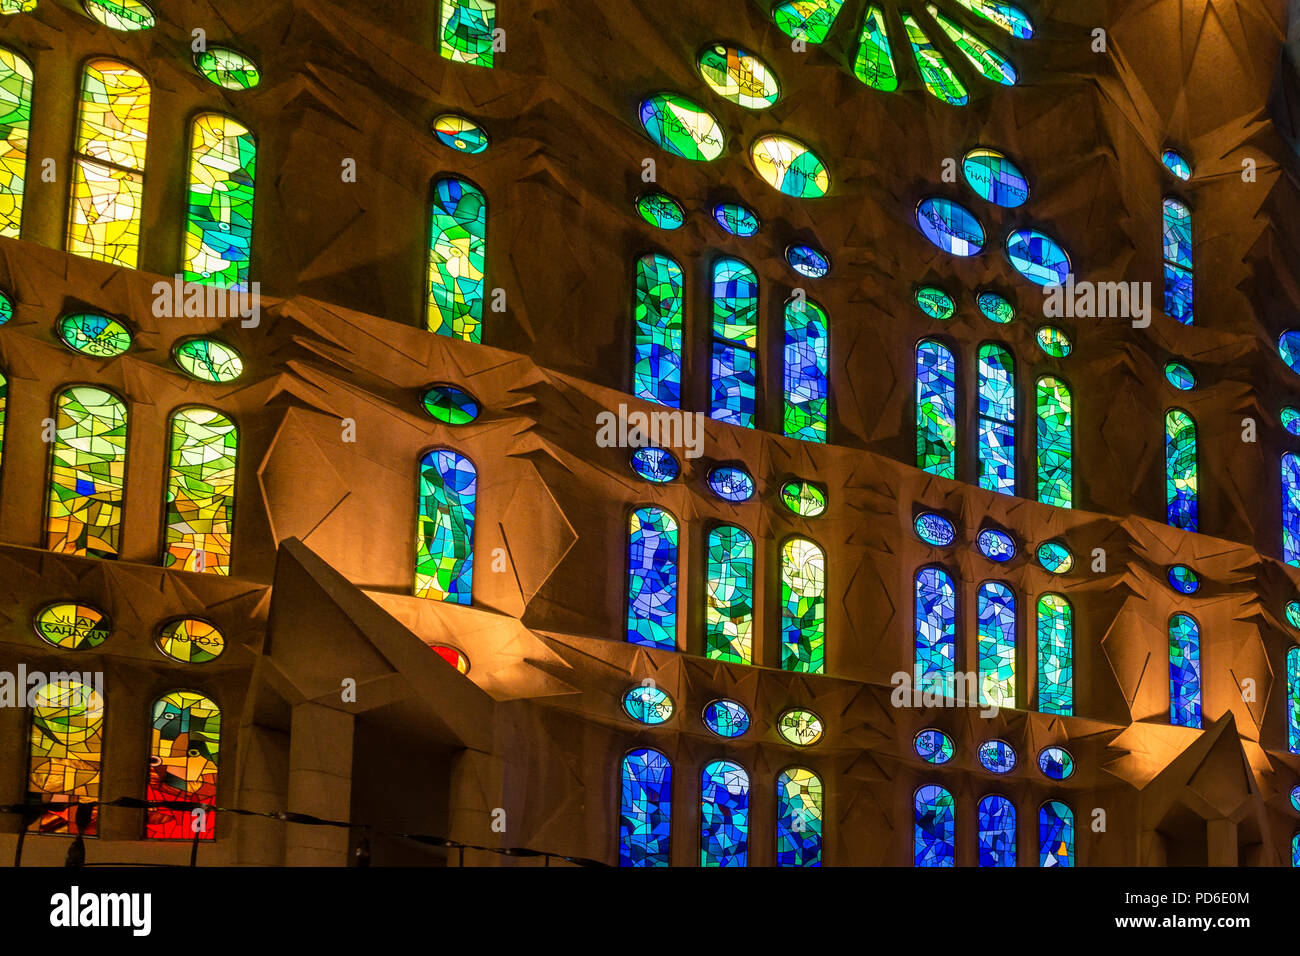 Colorful stained glass window of the Sagrada Familia - large unfinished Roman Catholic church in Barcelona, designed by Catalan architect Antoni Gaudi Stock Photo